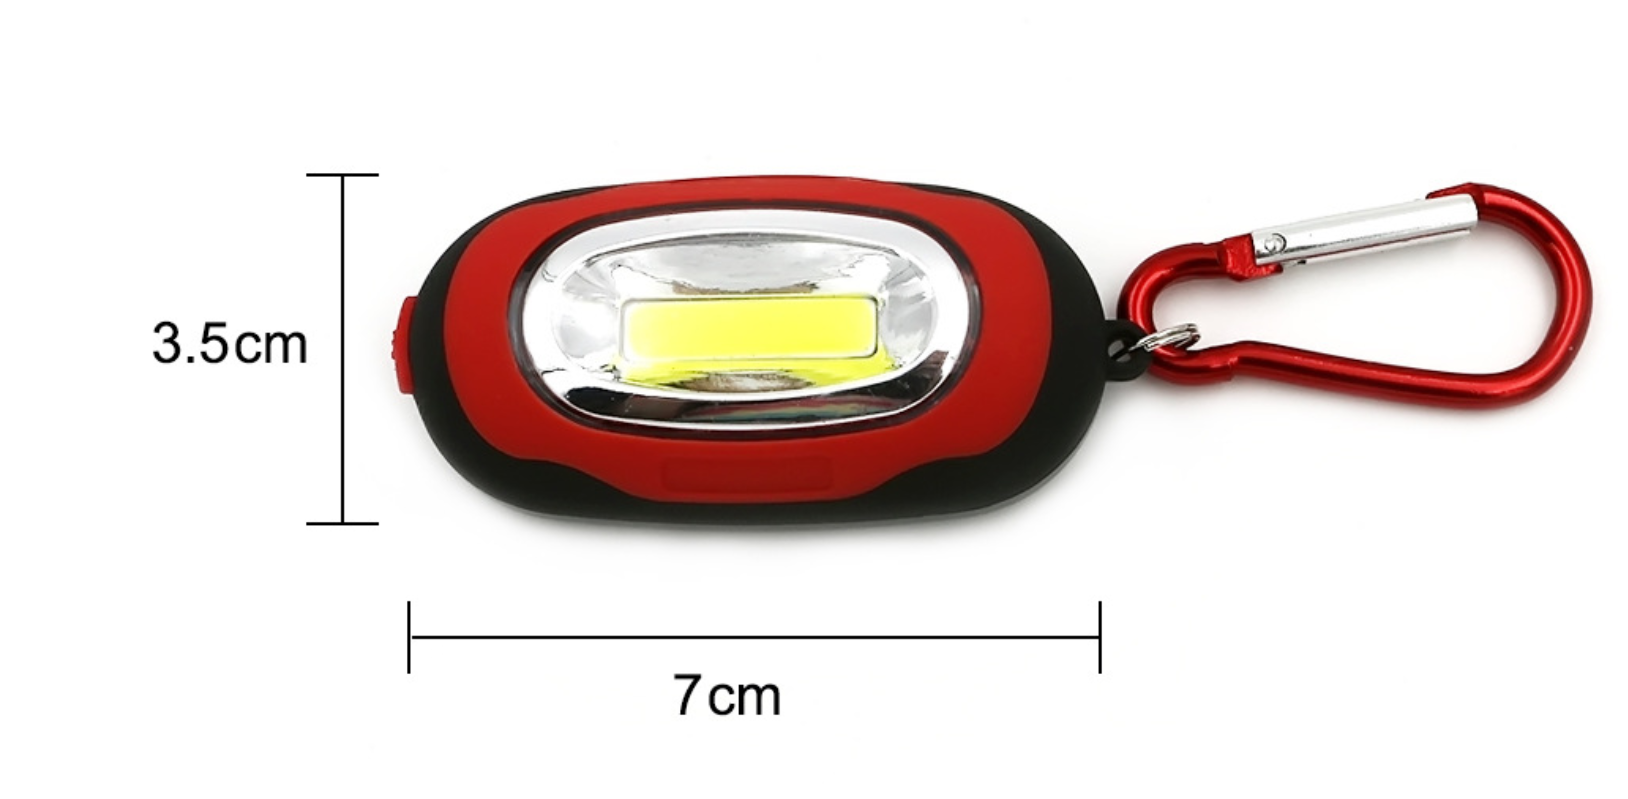 wholesale keychain flashlight, mini torch light keychain, led flashlight keychain wholesale, led keychain flashlight bulk